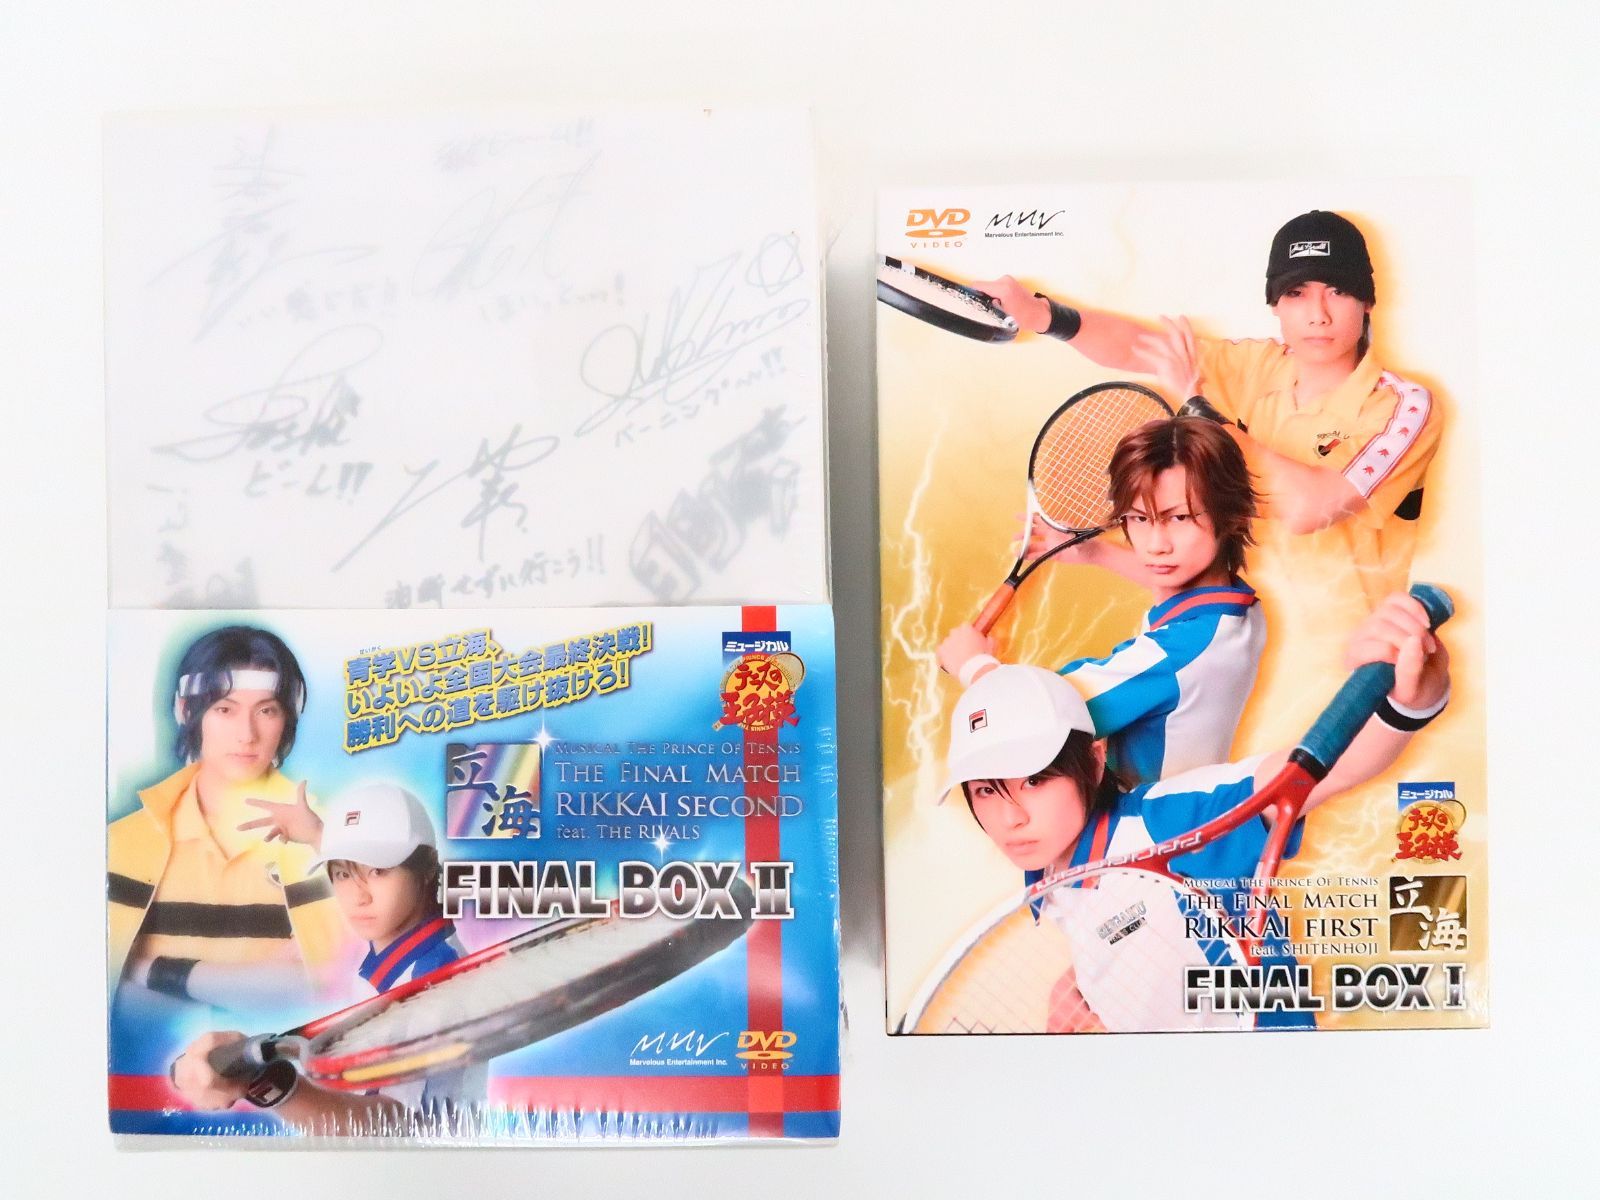 DVD ミュージカル テニスの王子様 THE FINAL MATCH 立海 FINAL BOX I